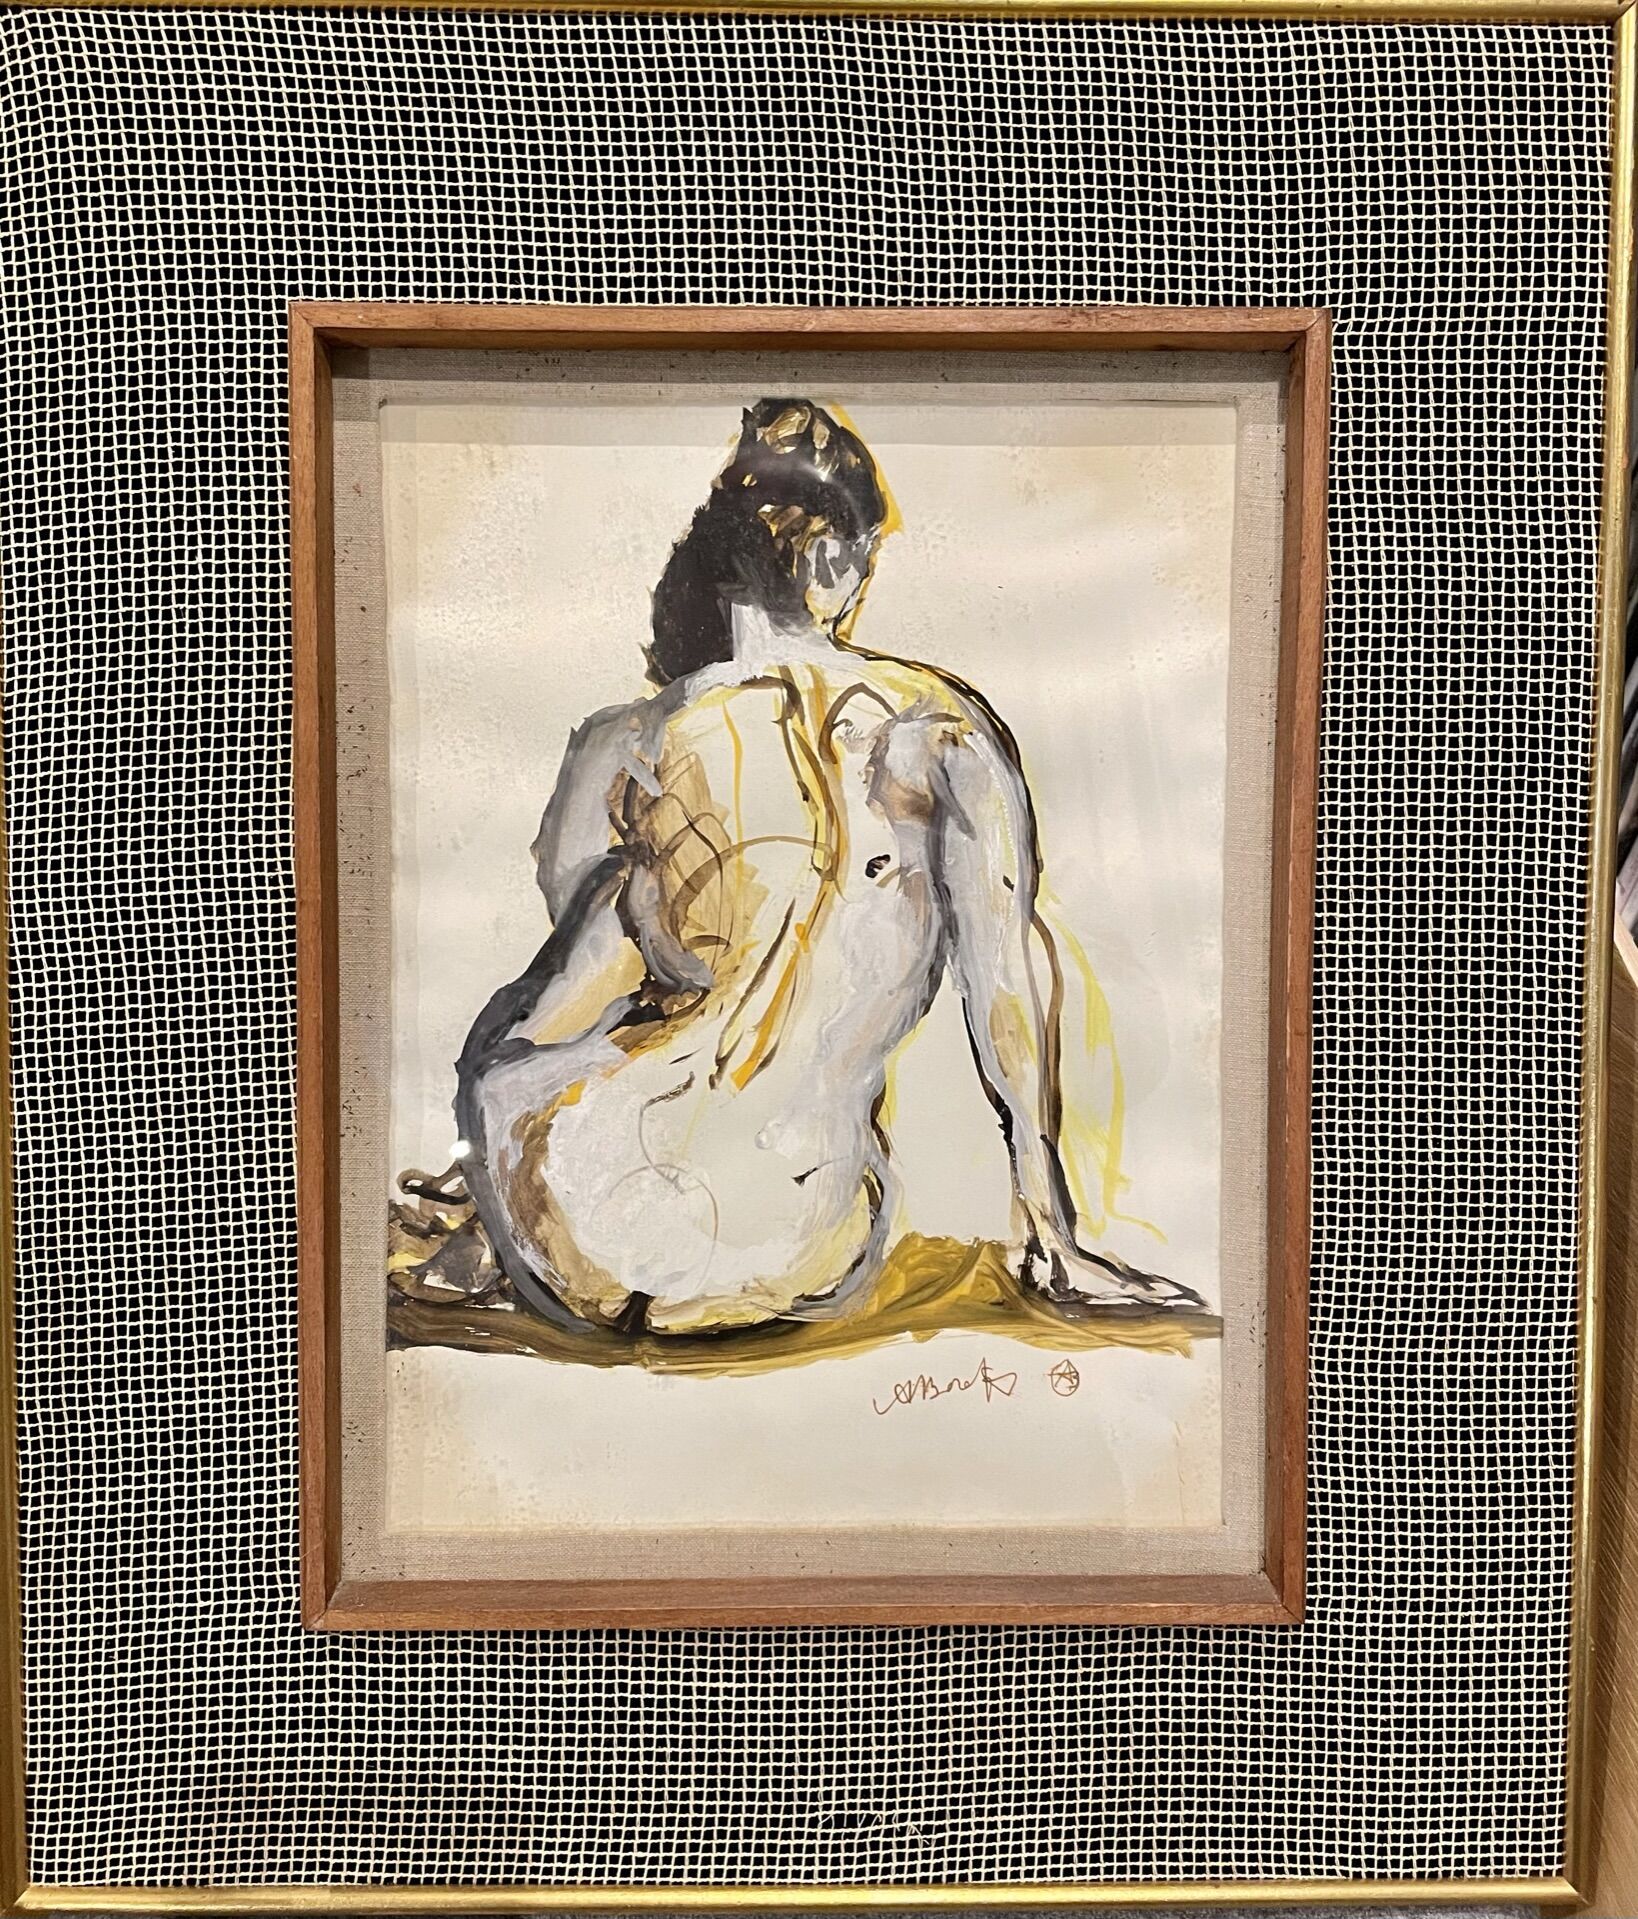 Null Avraam BARATZ (siglo XX), lote de cuatro obras:

"Desnudo femenino sentado &hellip;